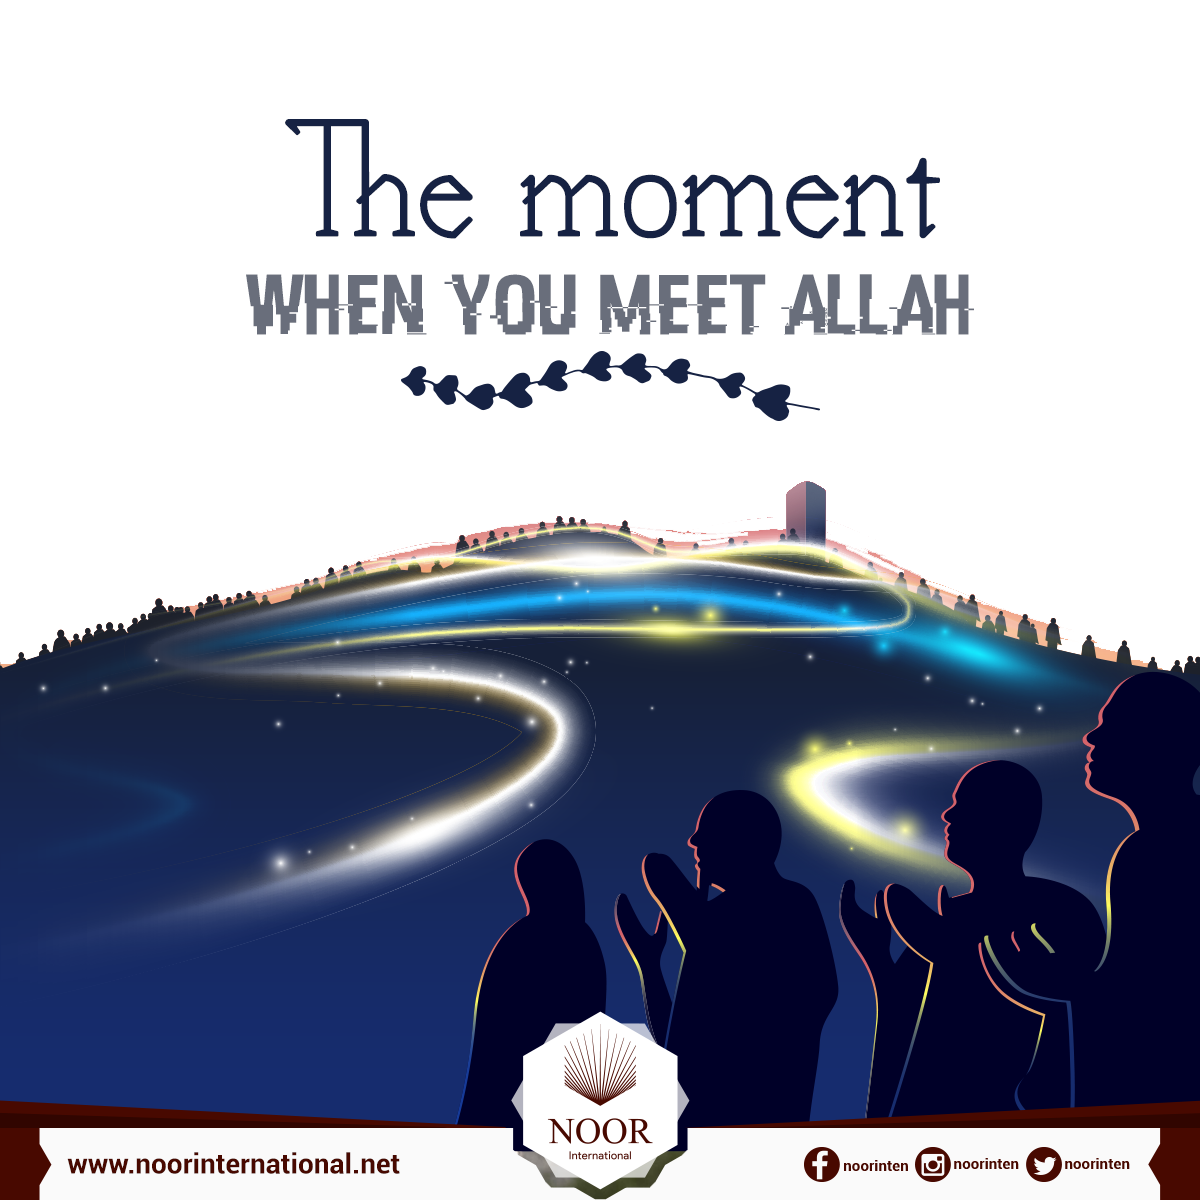 The moment when you meet Allah